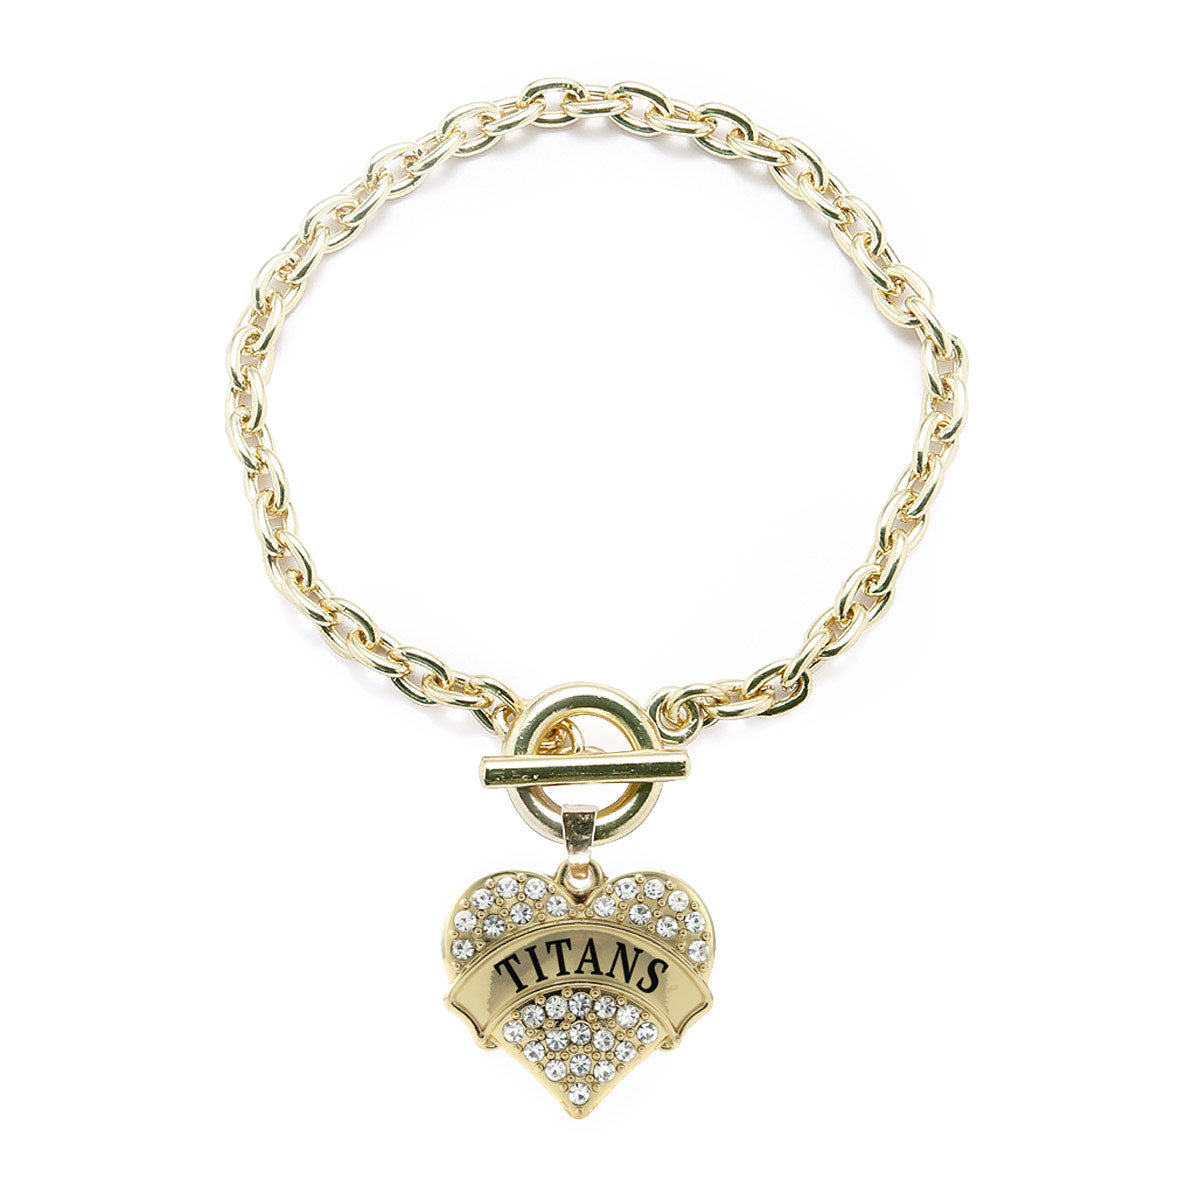 Gold Titans Pave Heart Charm Toggle Bracelet